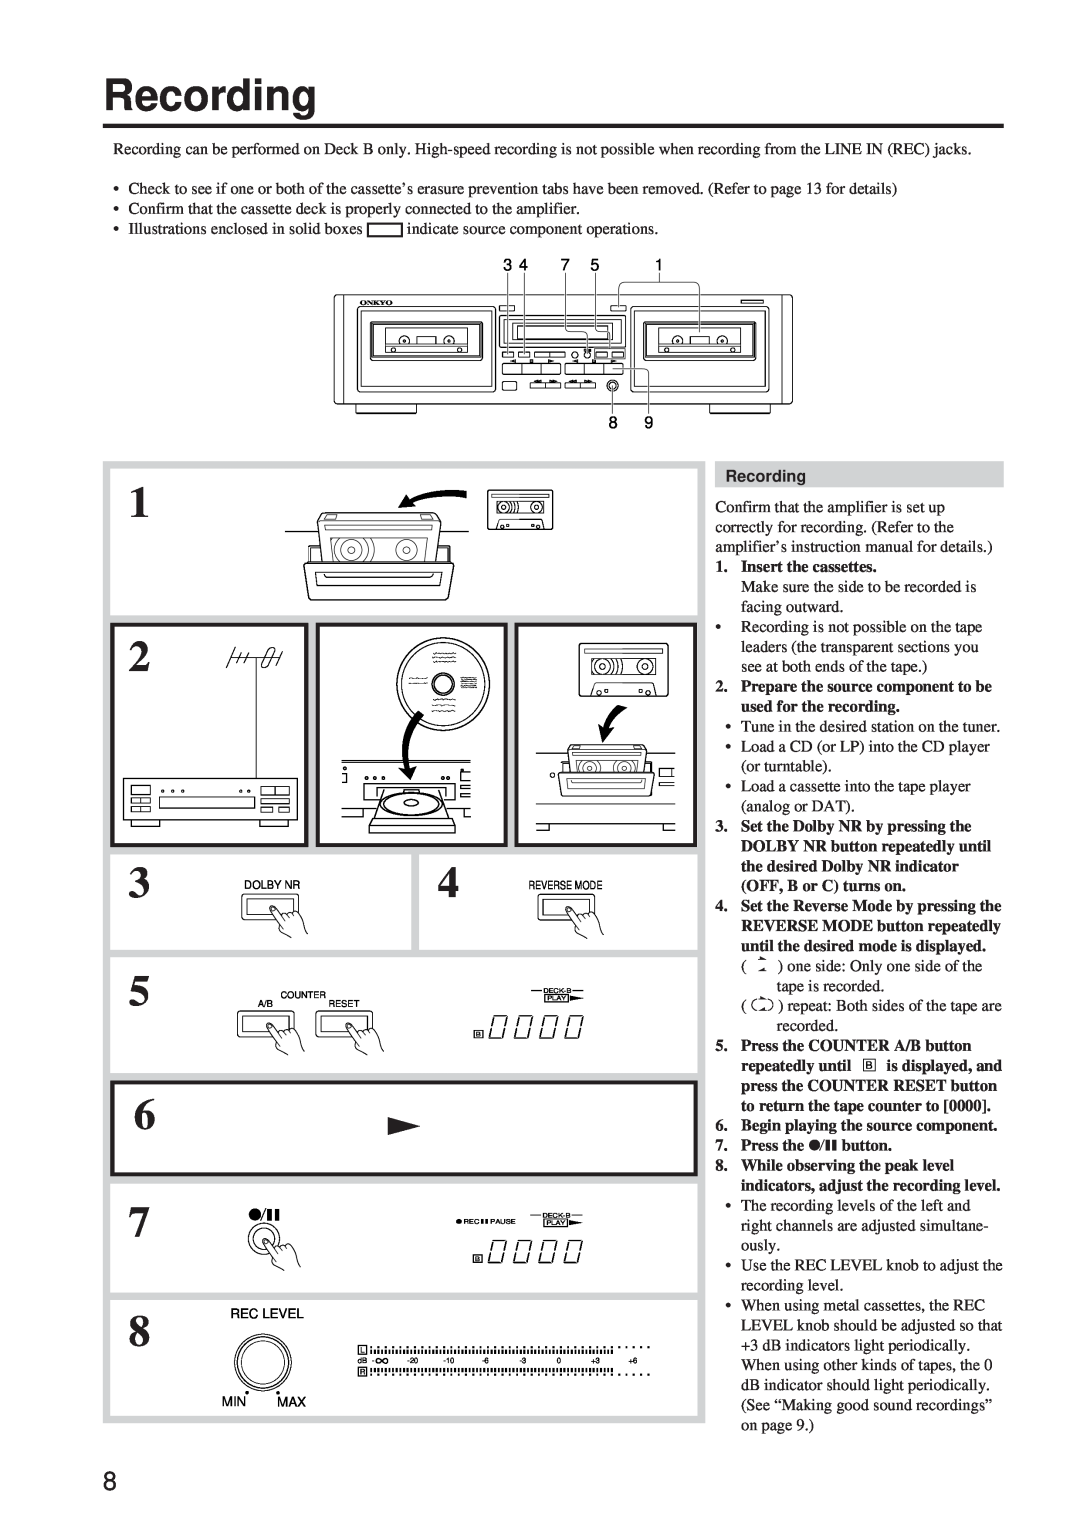 Onkyo TA-RW244/144 instruction manual Recording 